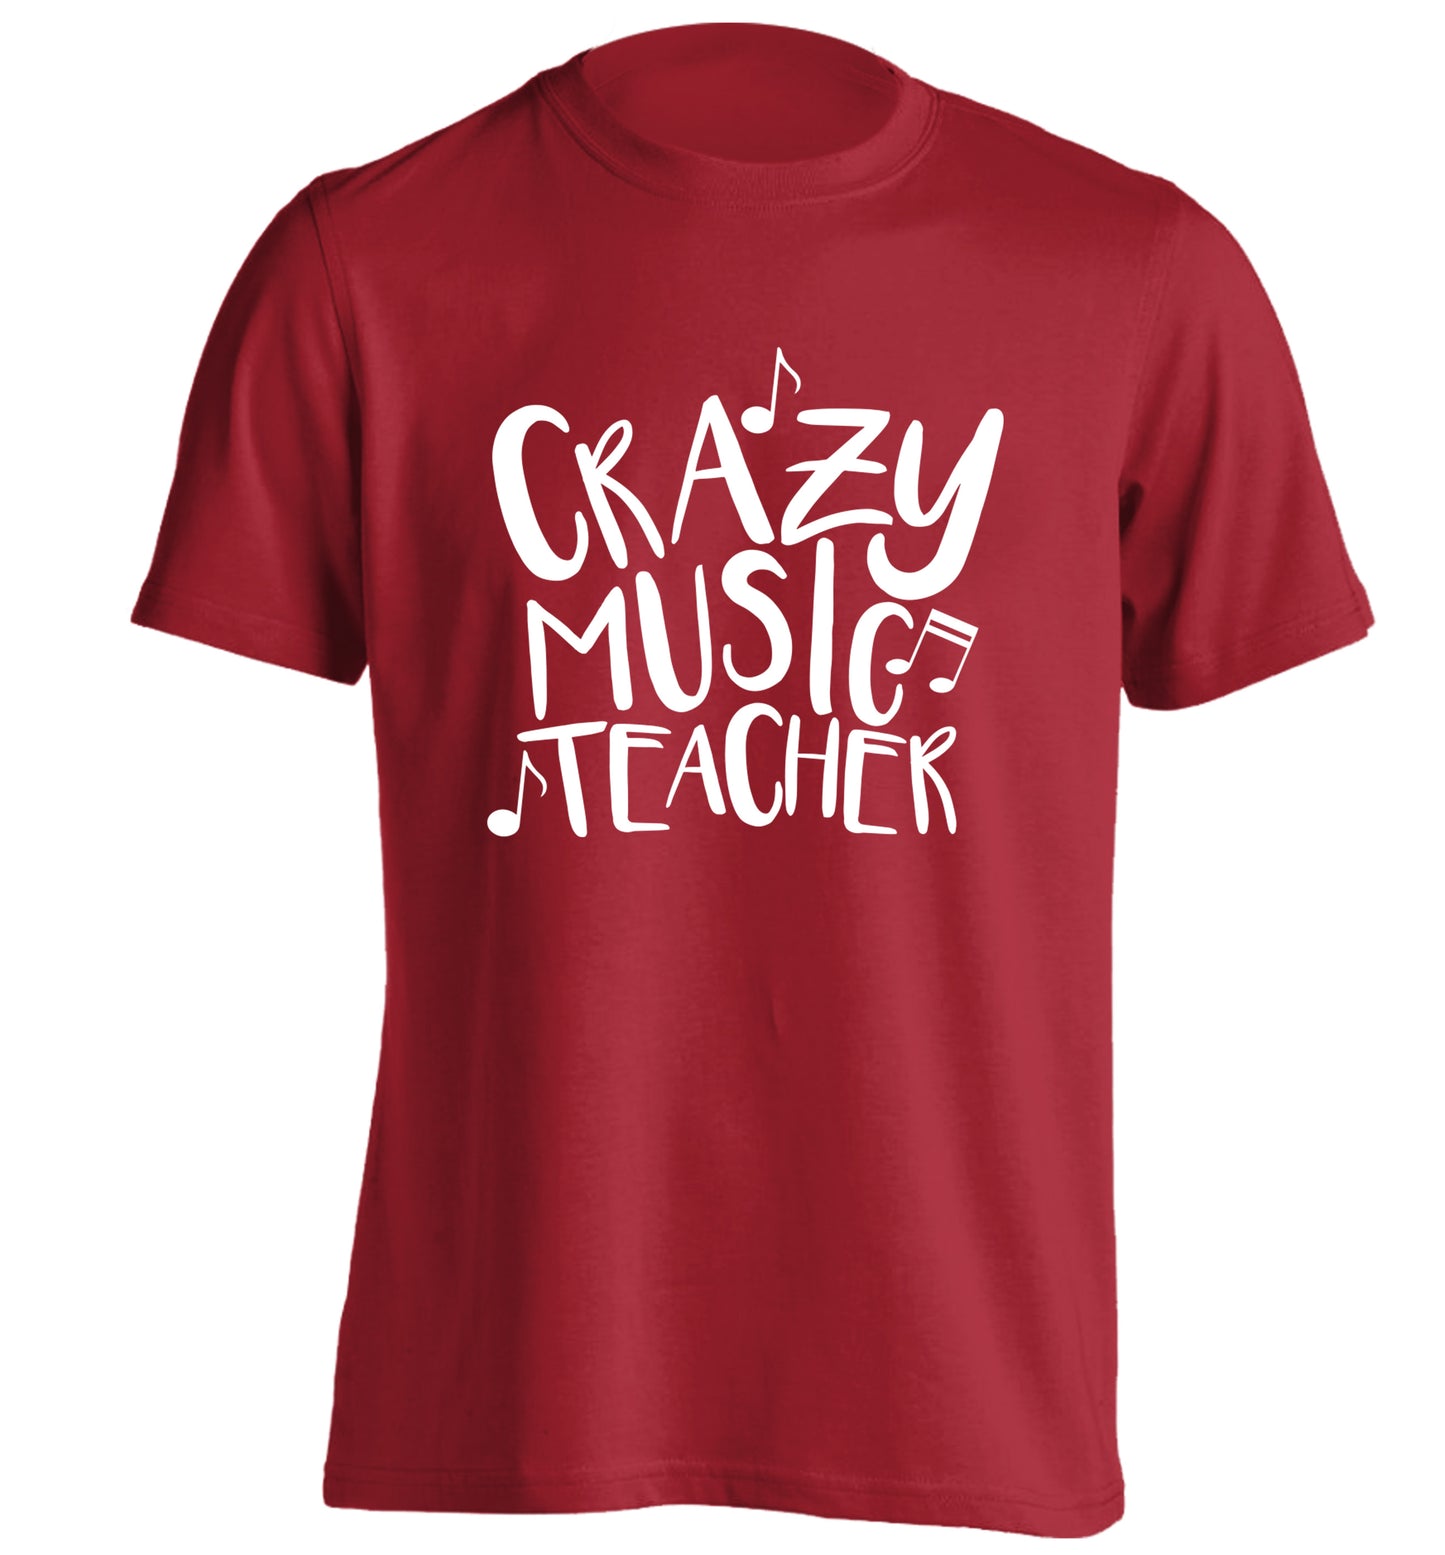 Crazy music teacher adults unisex red Tshirt 2XL